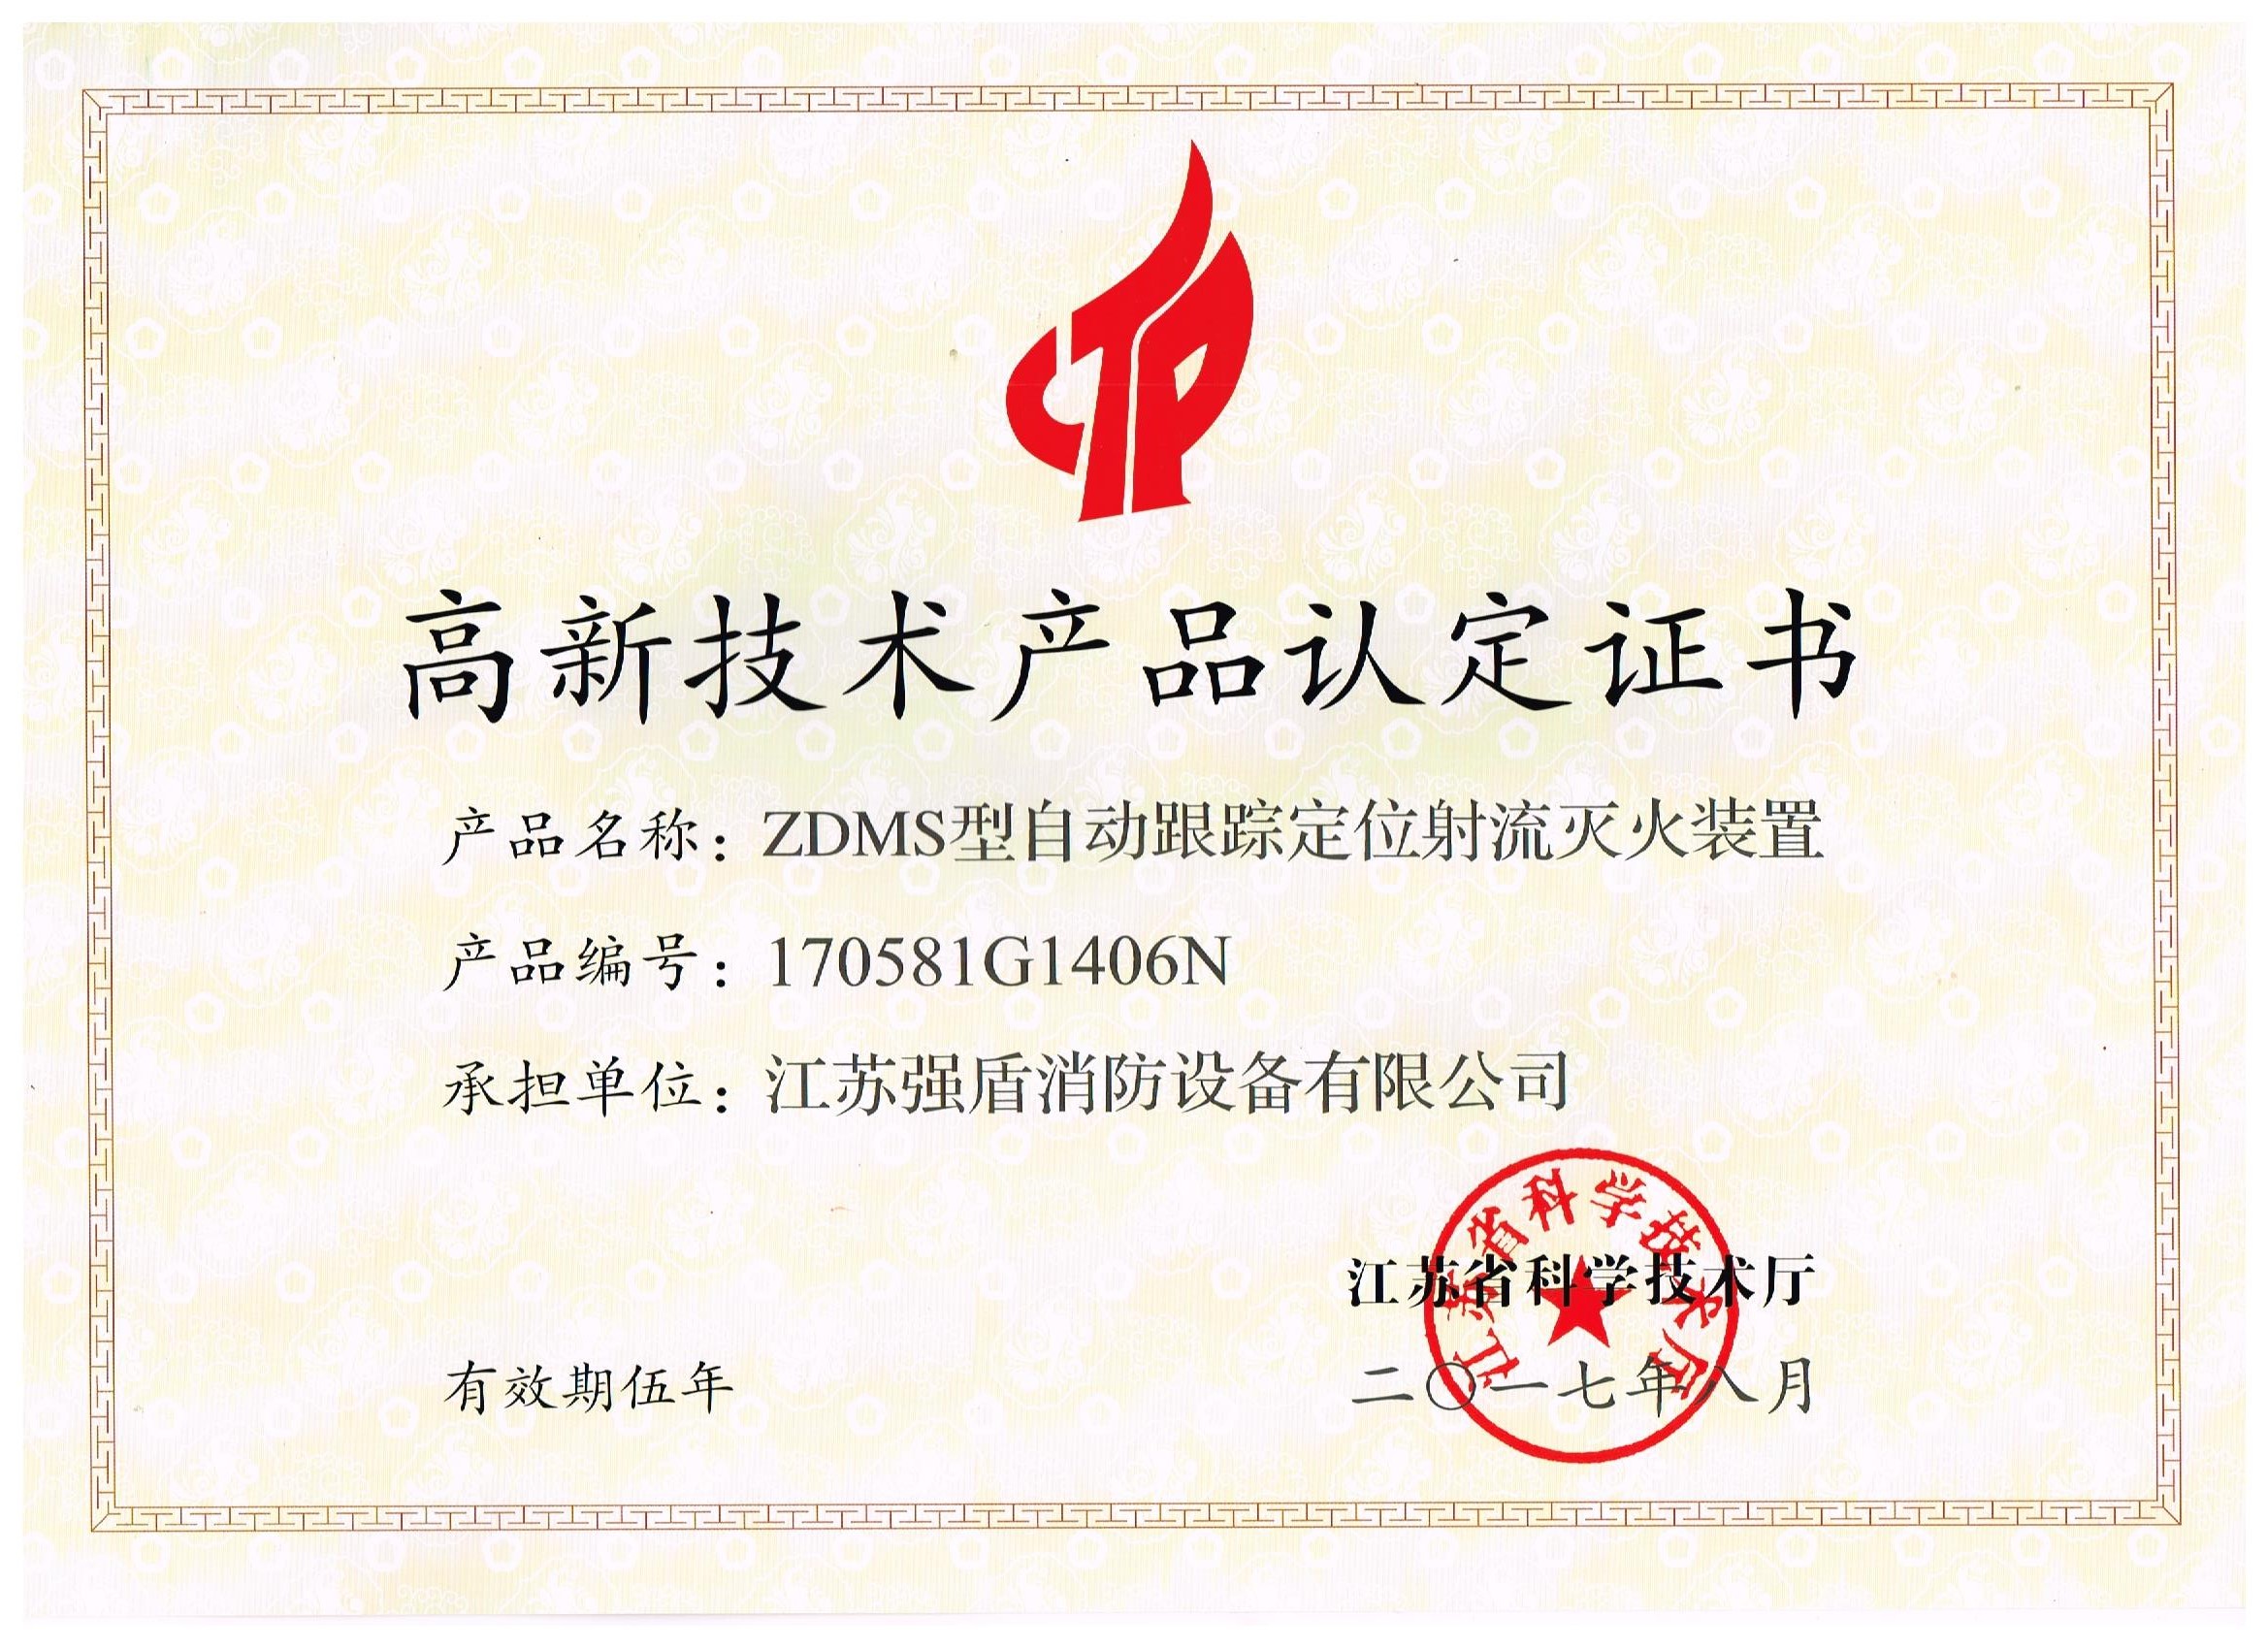 ZDMS型自动消防炮高新技术产品认定证书